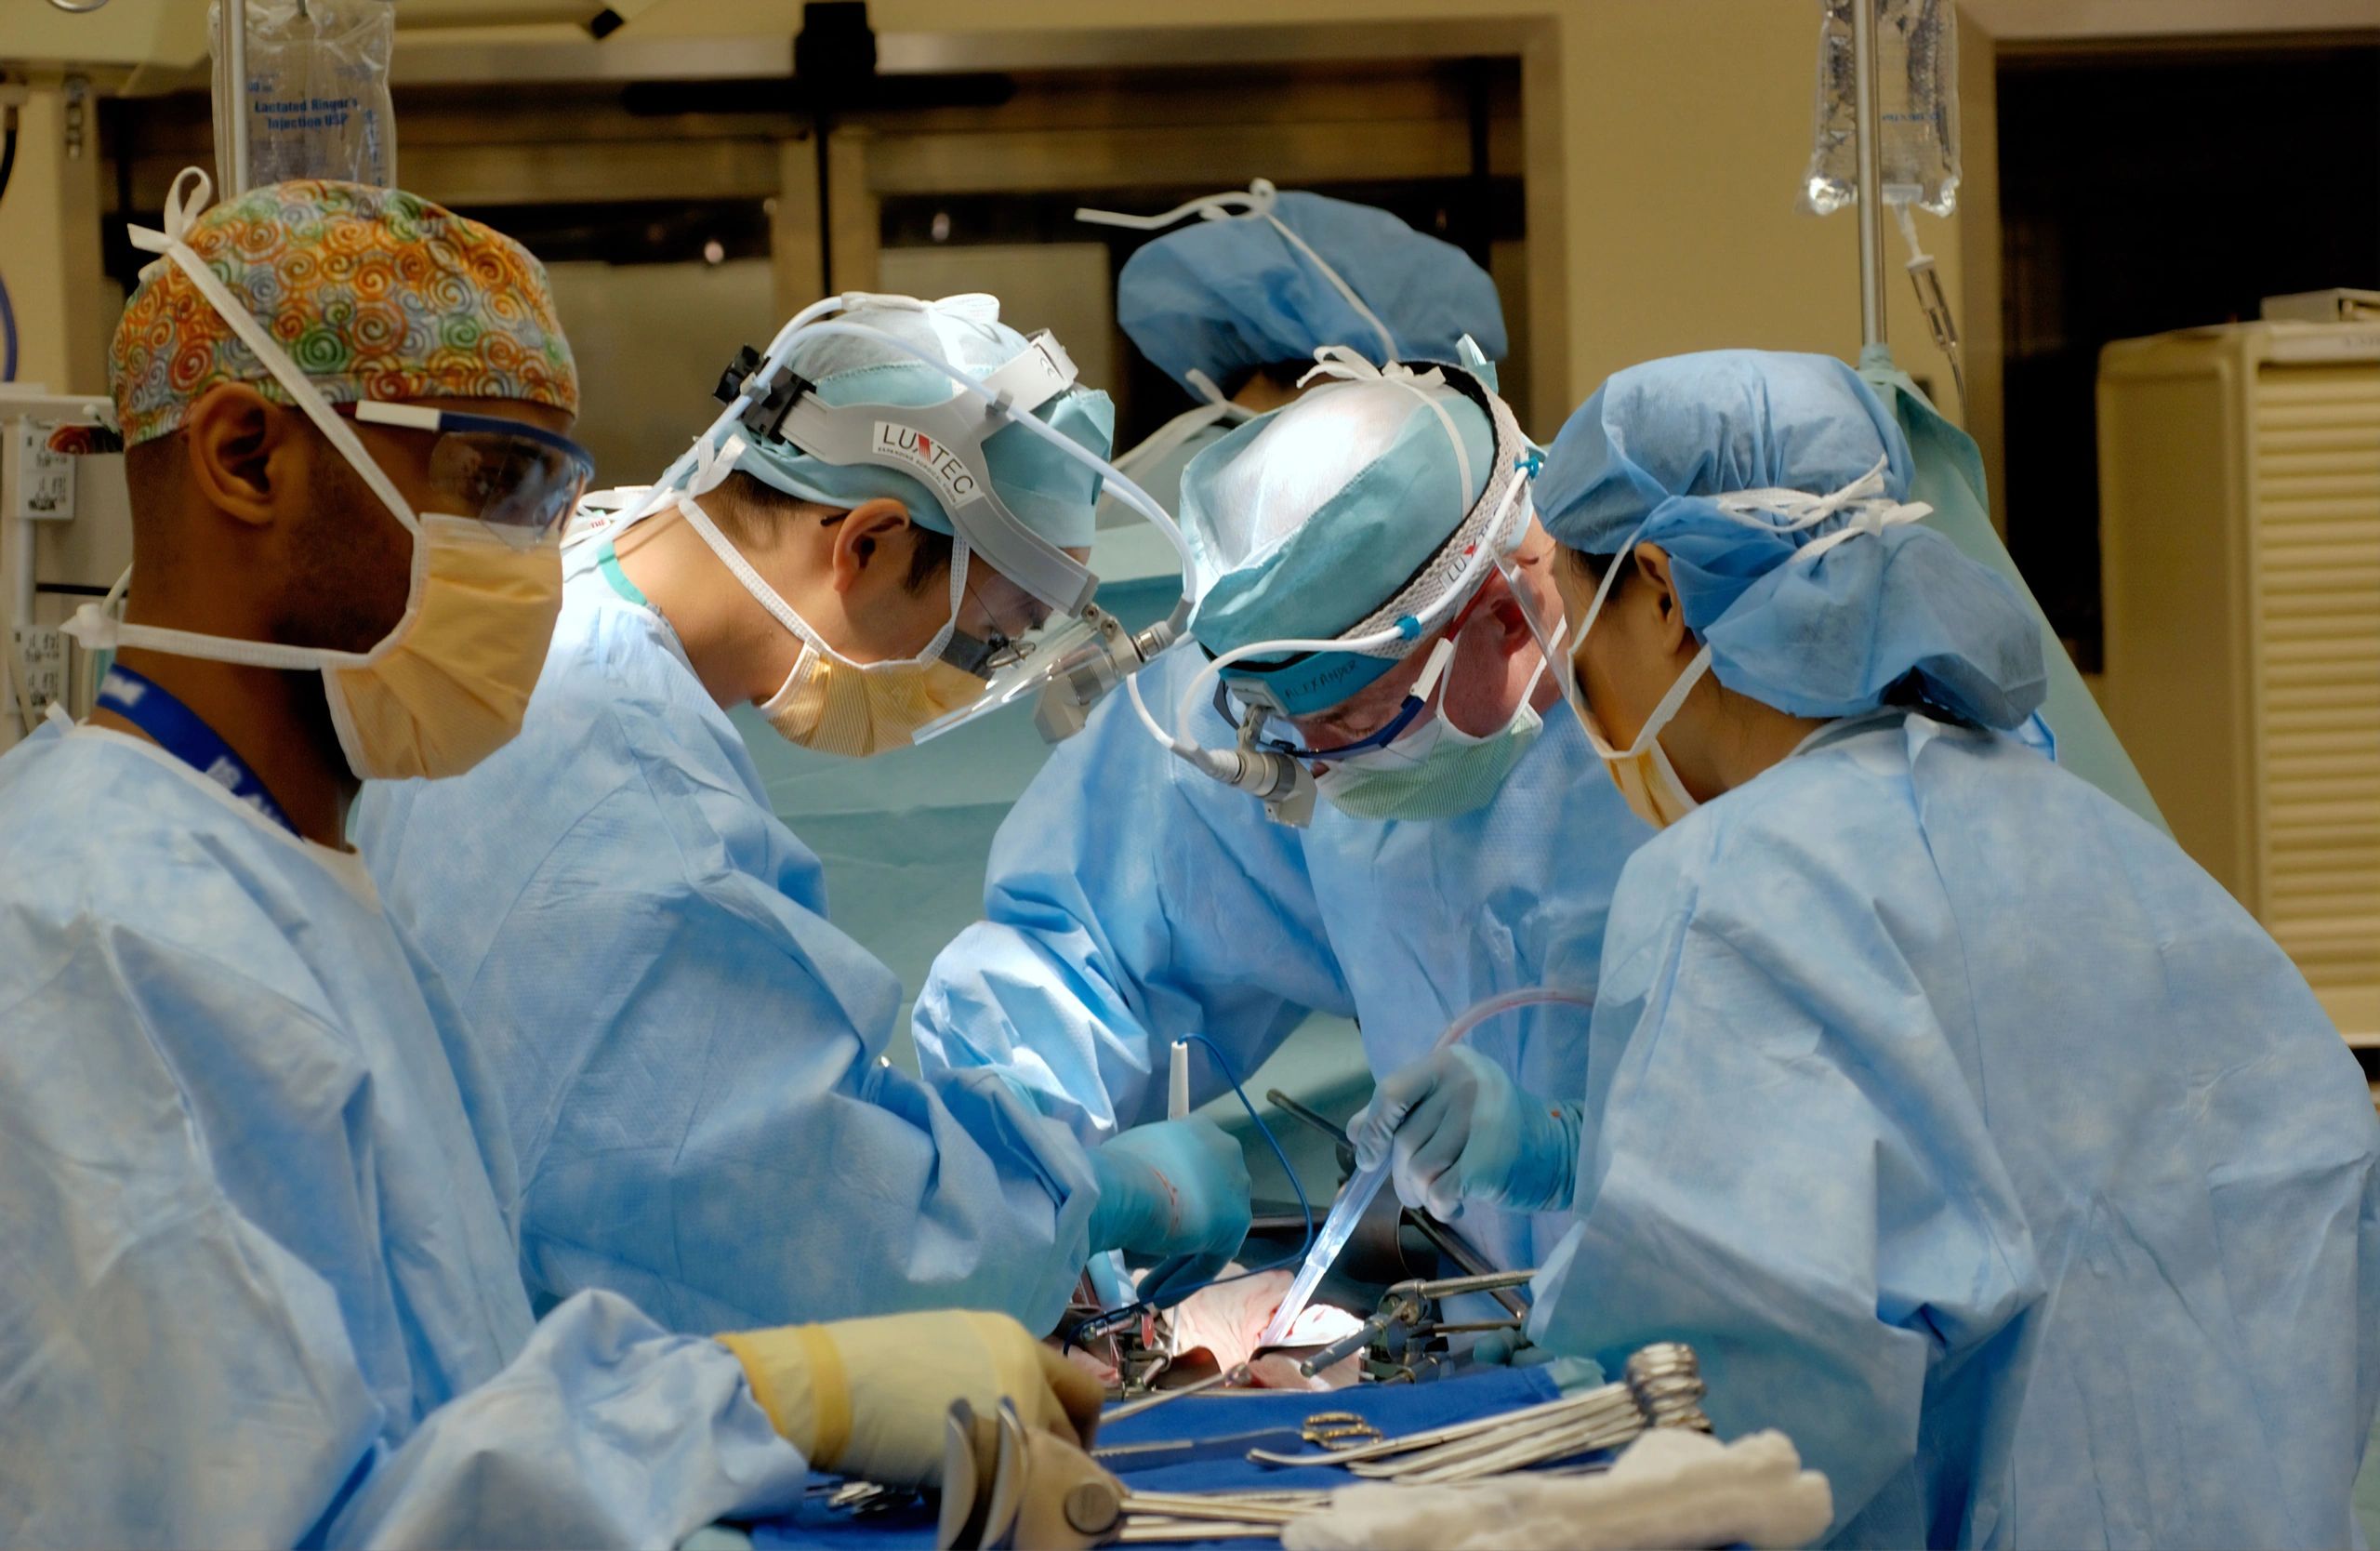 Medical professionals preforming surgery